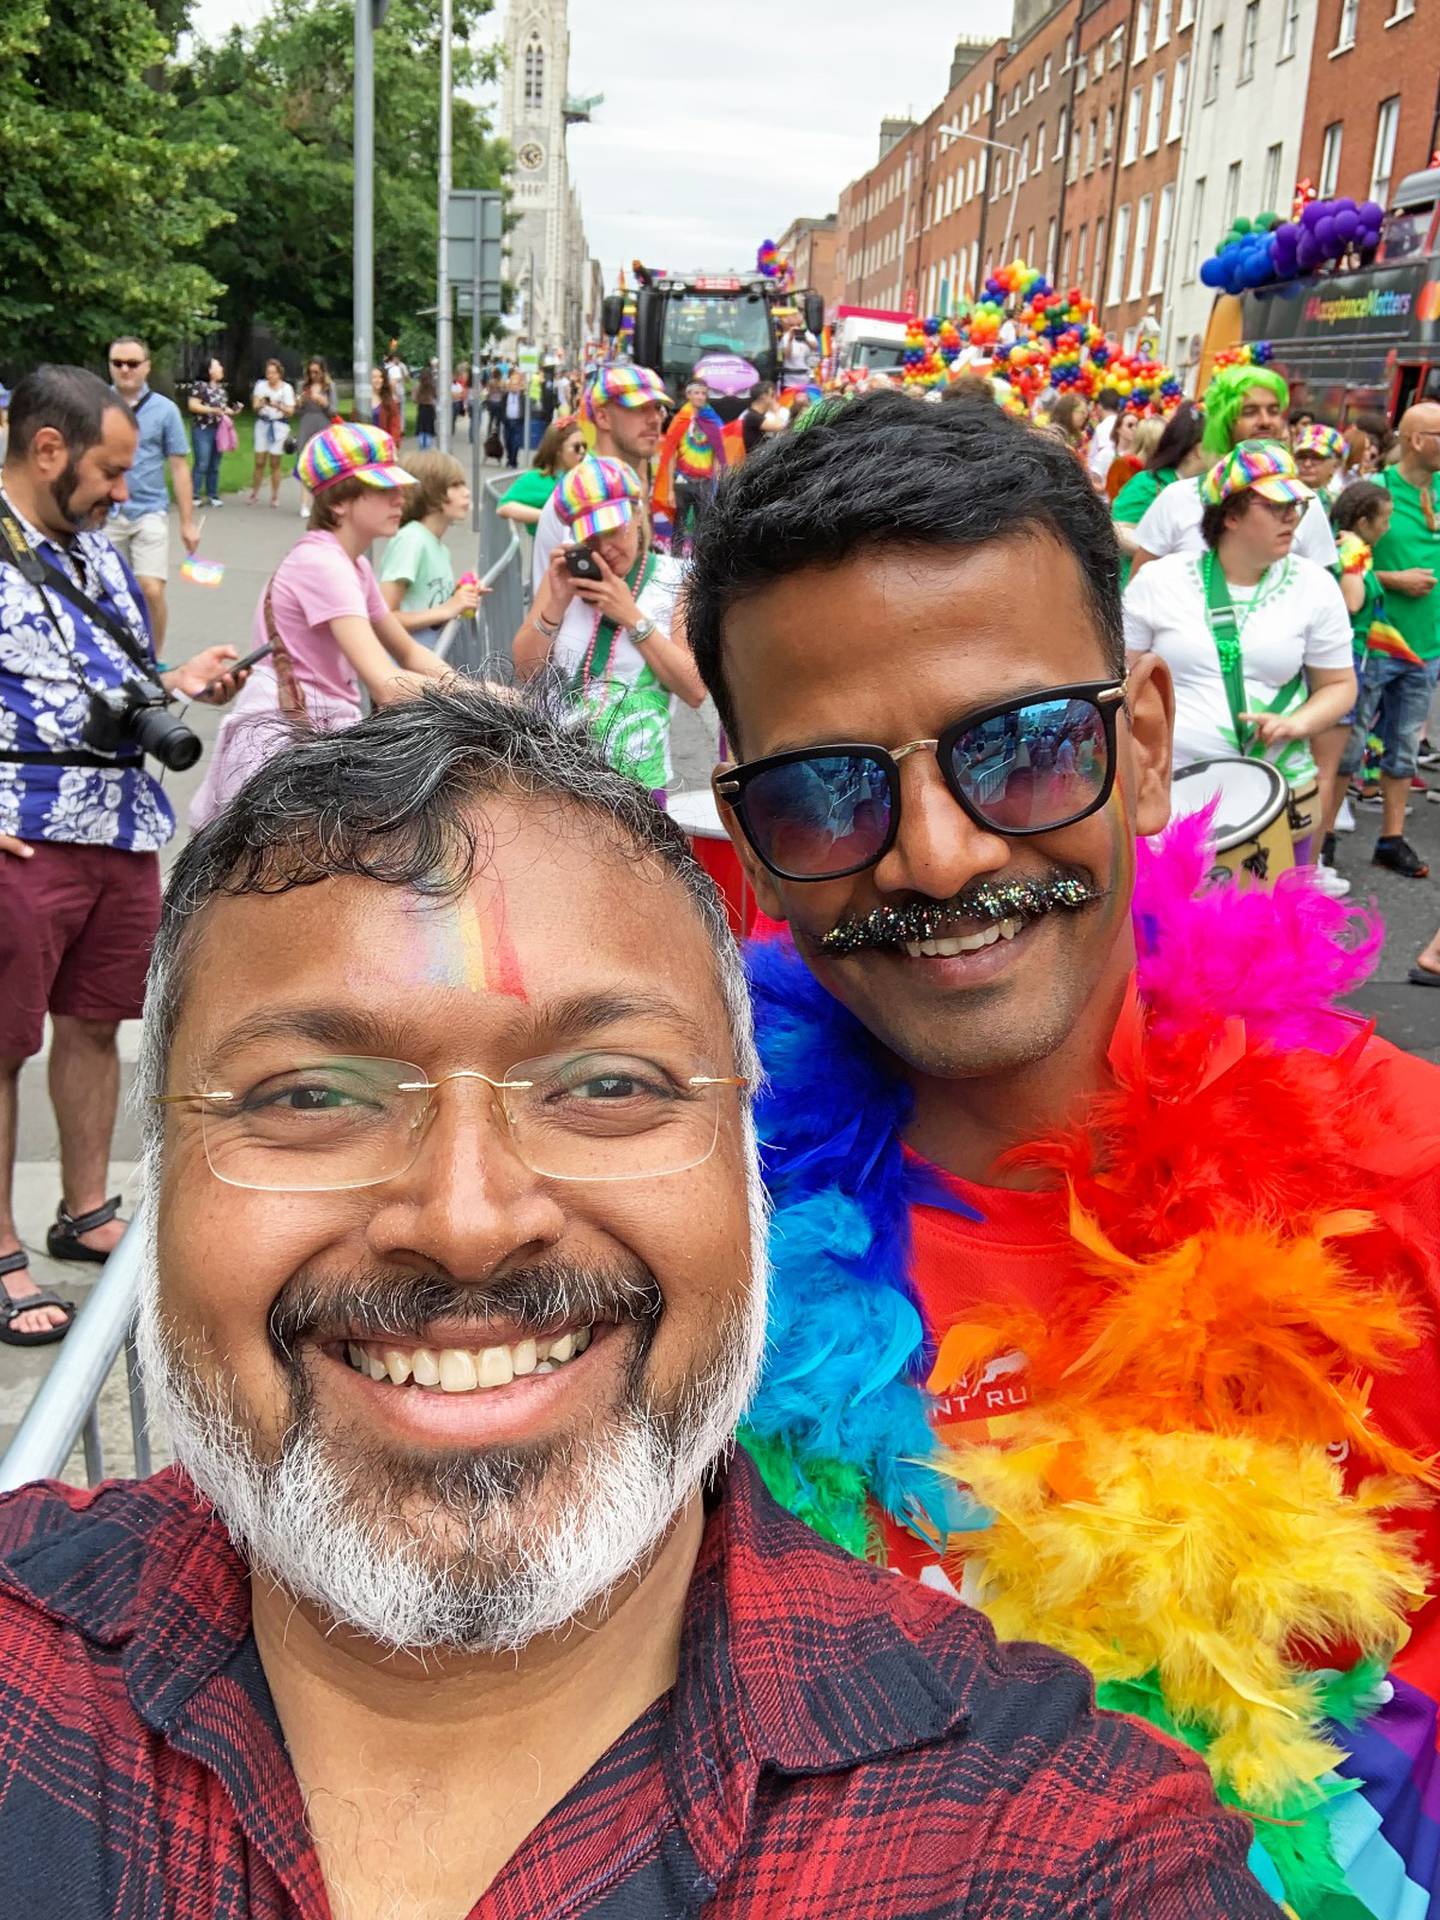 Pradeep Mahadeshwar (right) and friend Devdutt Pattanaik (left) at Dublin Pride in 2019